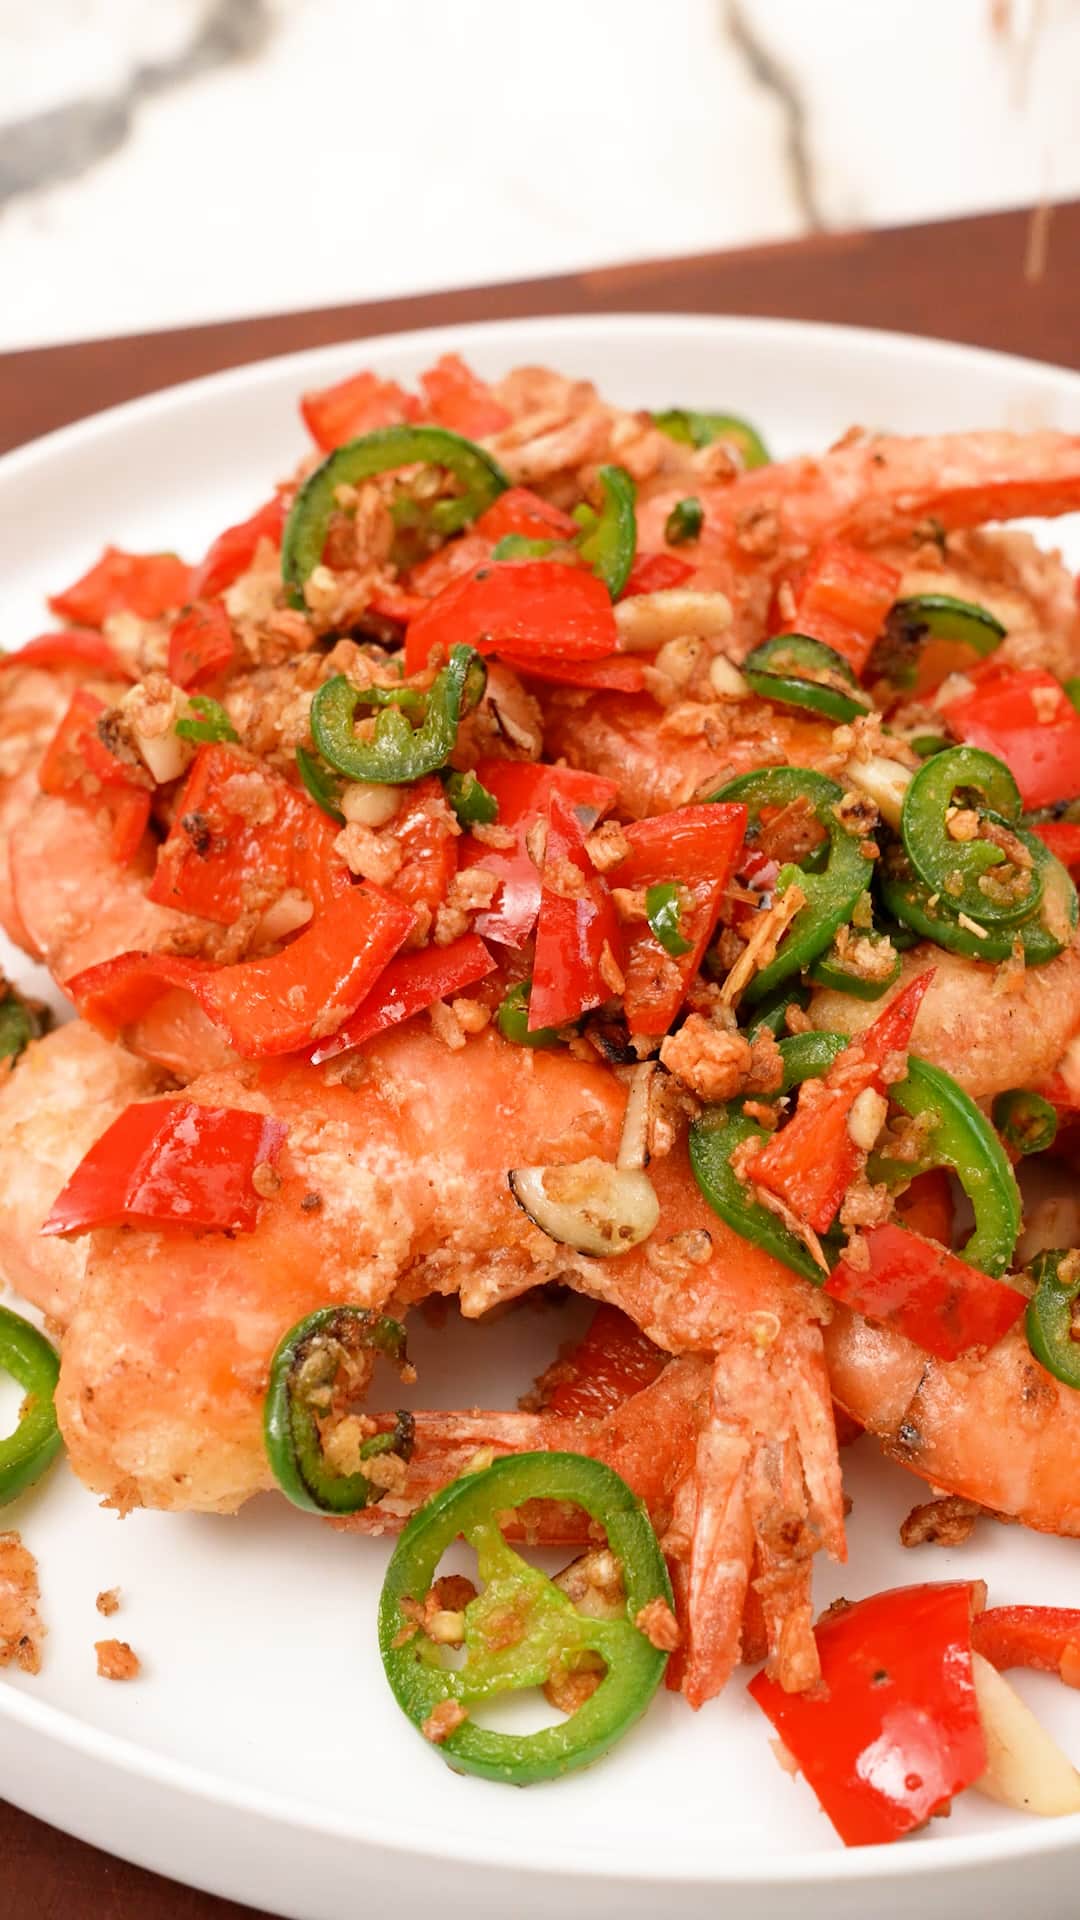 Salt and pepper shrimp on a plate.